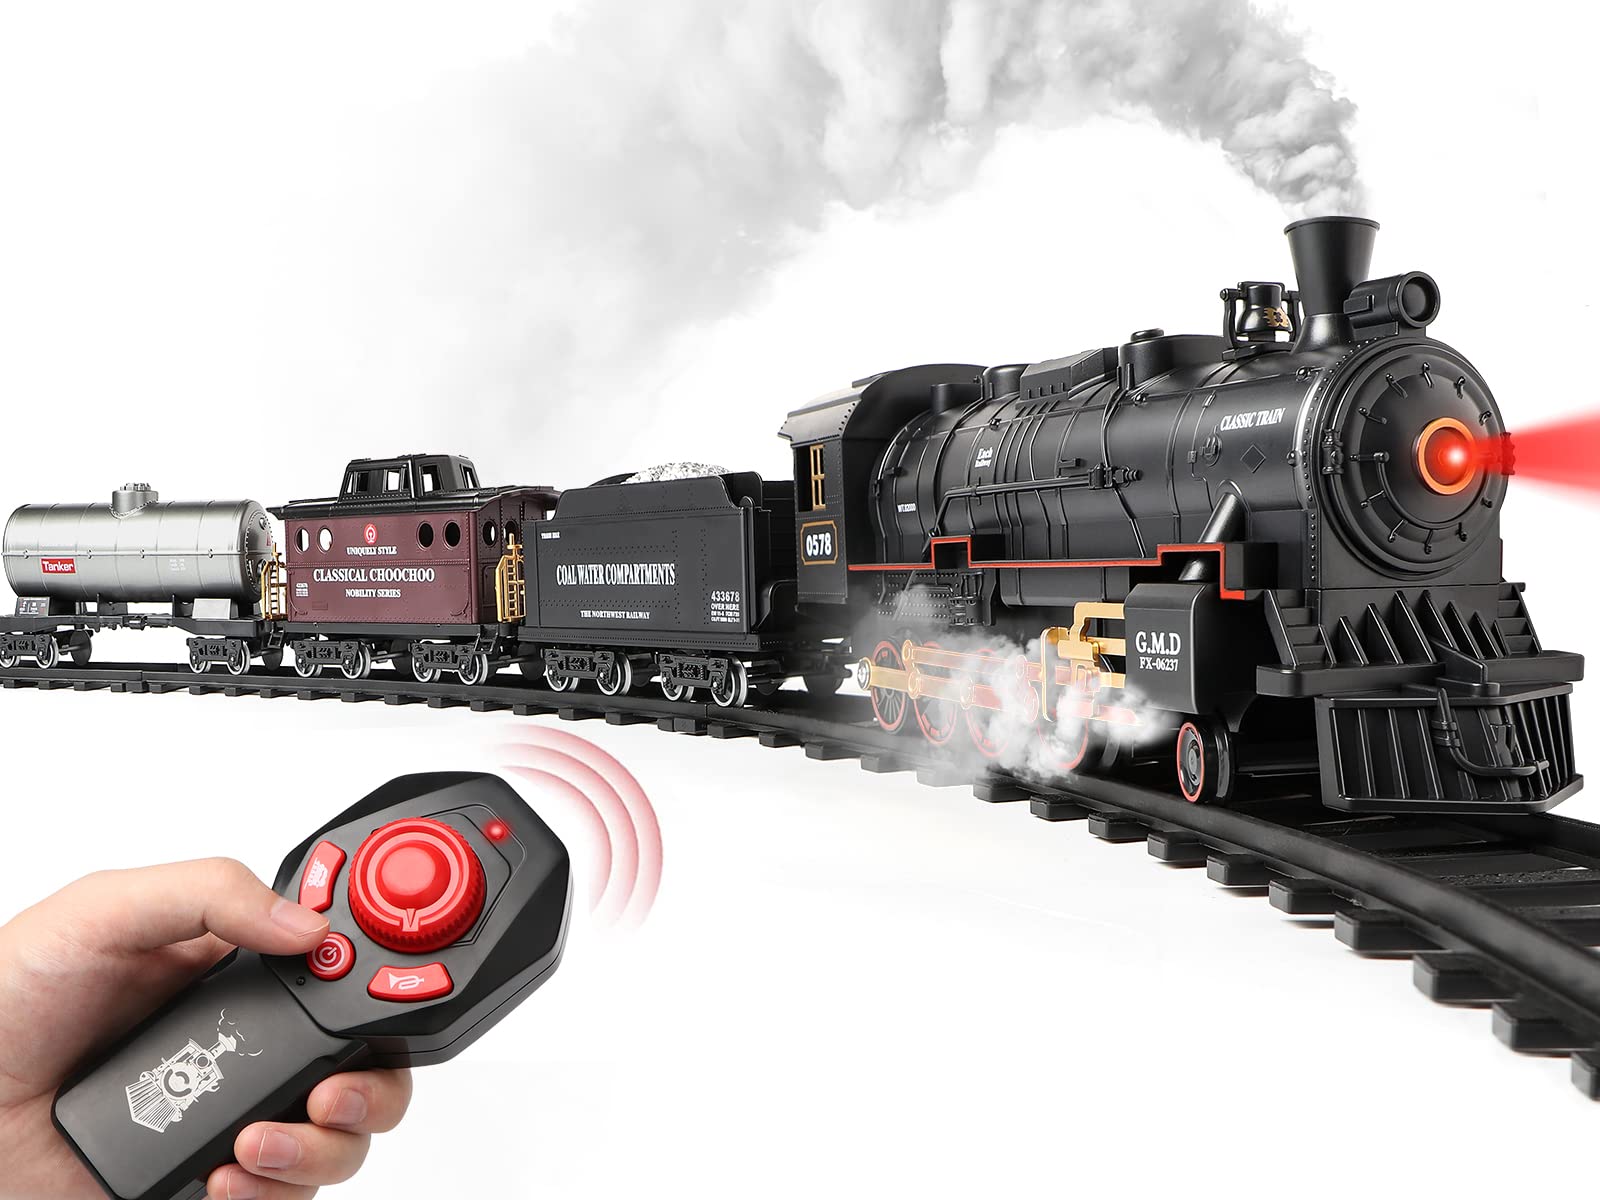 Hot Bee Train Set For Boys - Remote Control Train Toys Wsteam Locomotive, Cargo Cars  Tracks,Trains Wrealistic Smoke,Sounds  L